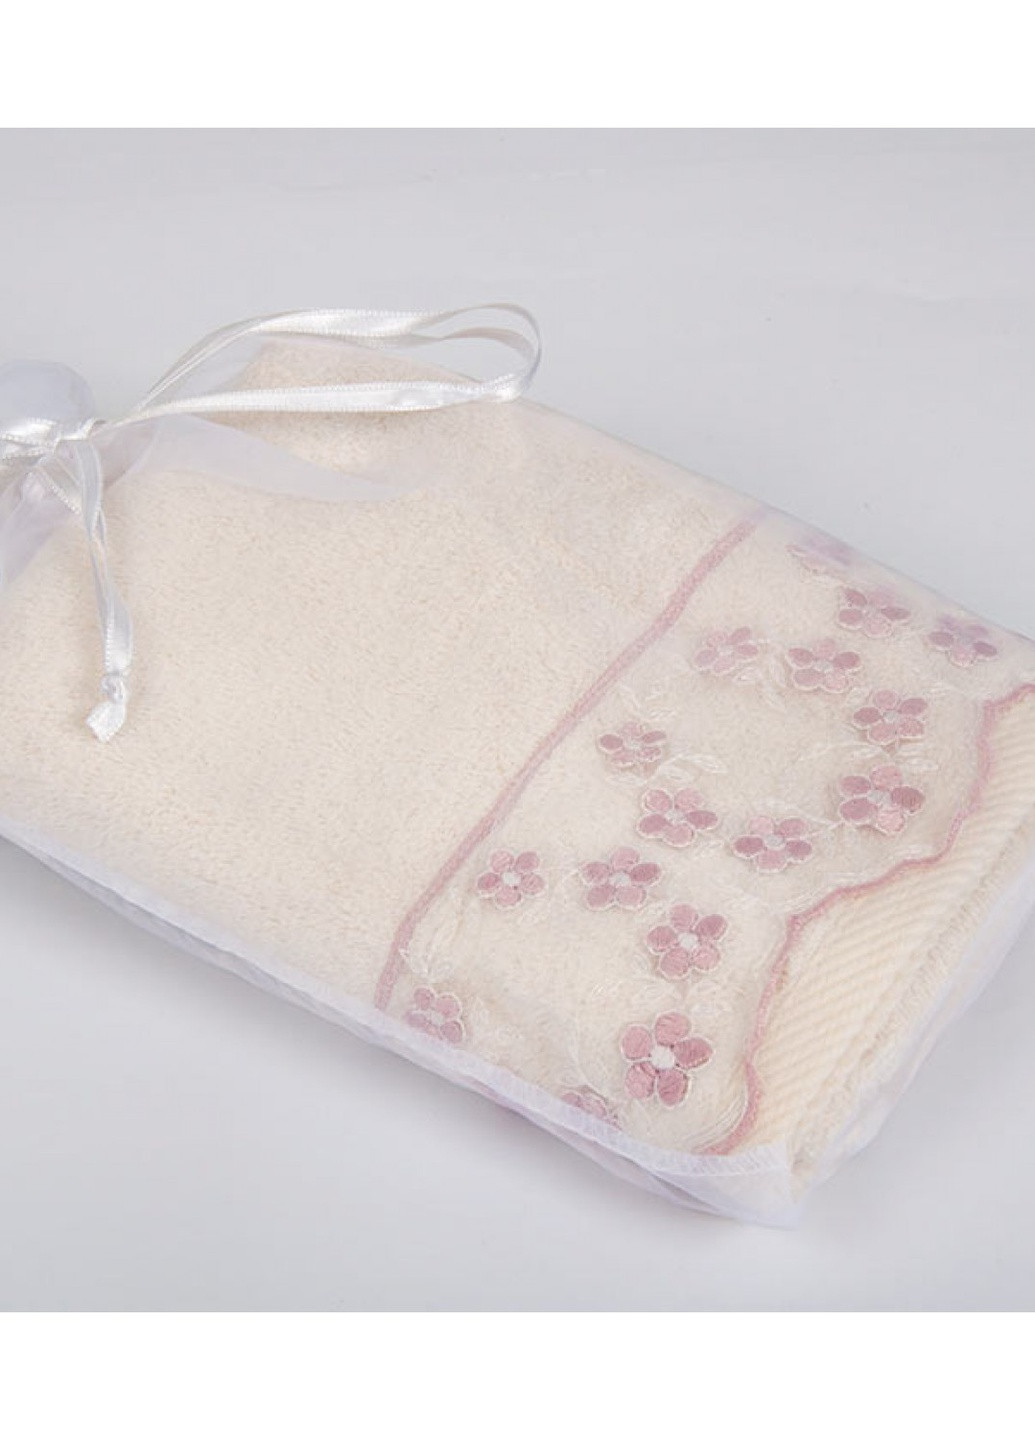 Maxstyle полотенце бамбуковое - pudra кремовое 50*90 орнамент молочный производство - Турция